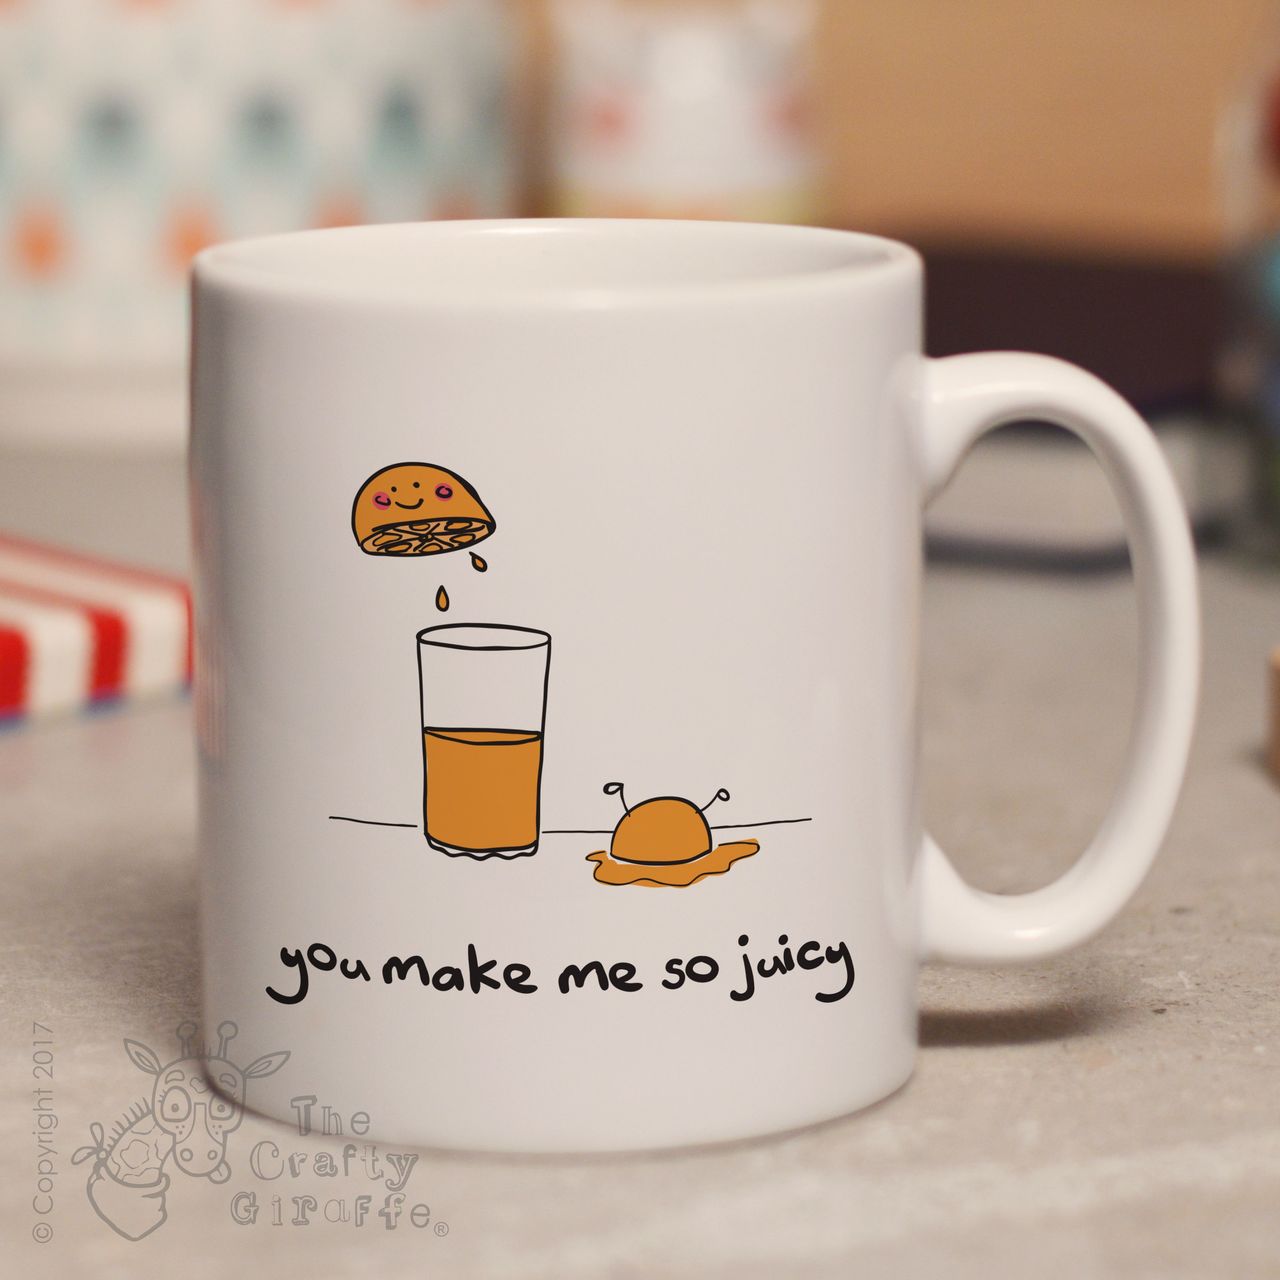 You make me so juicy mug